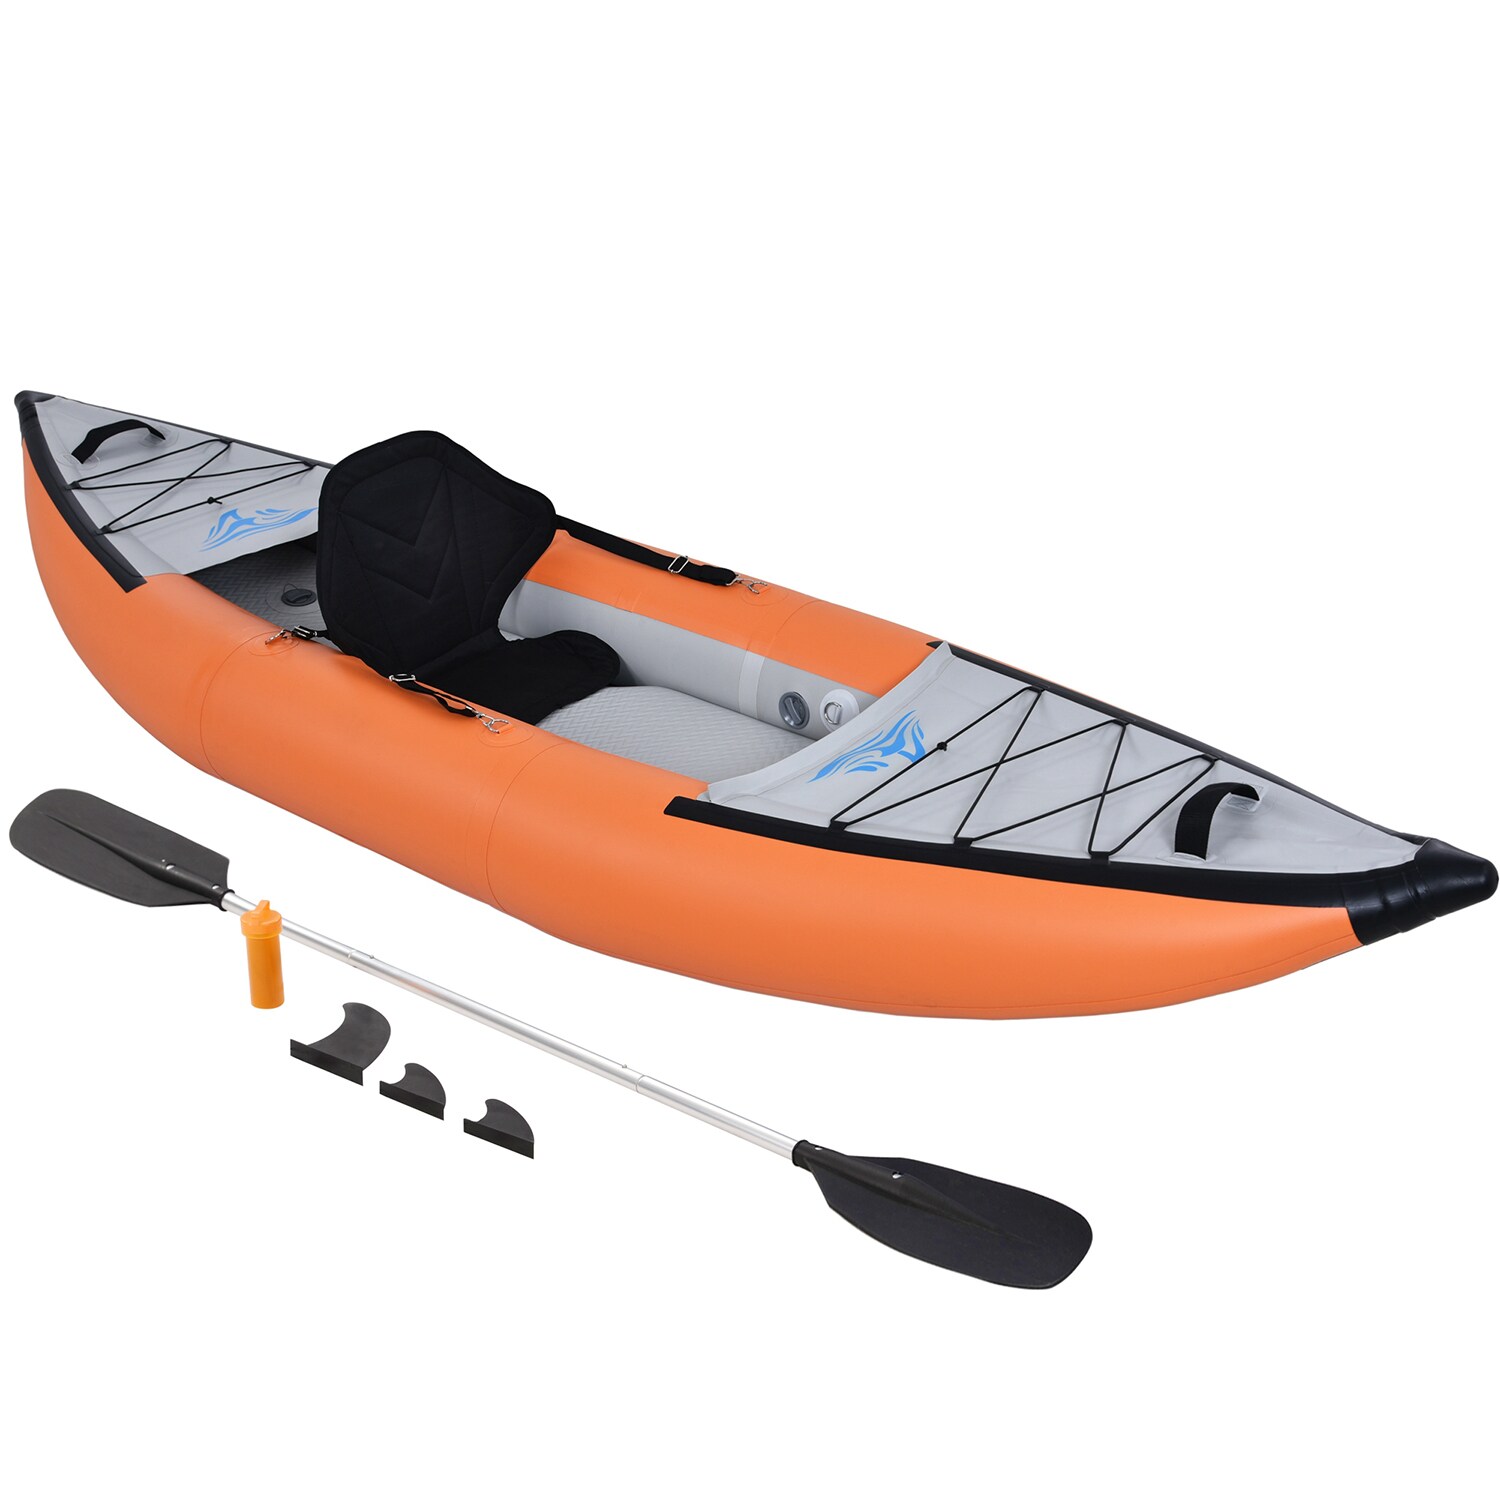 SINOFURN Sit-in 1 Person 10-ft PVC Kayak in the Kayaks department at